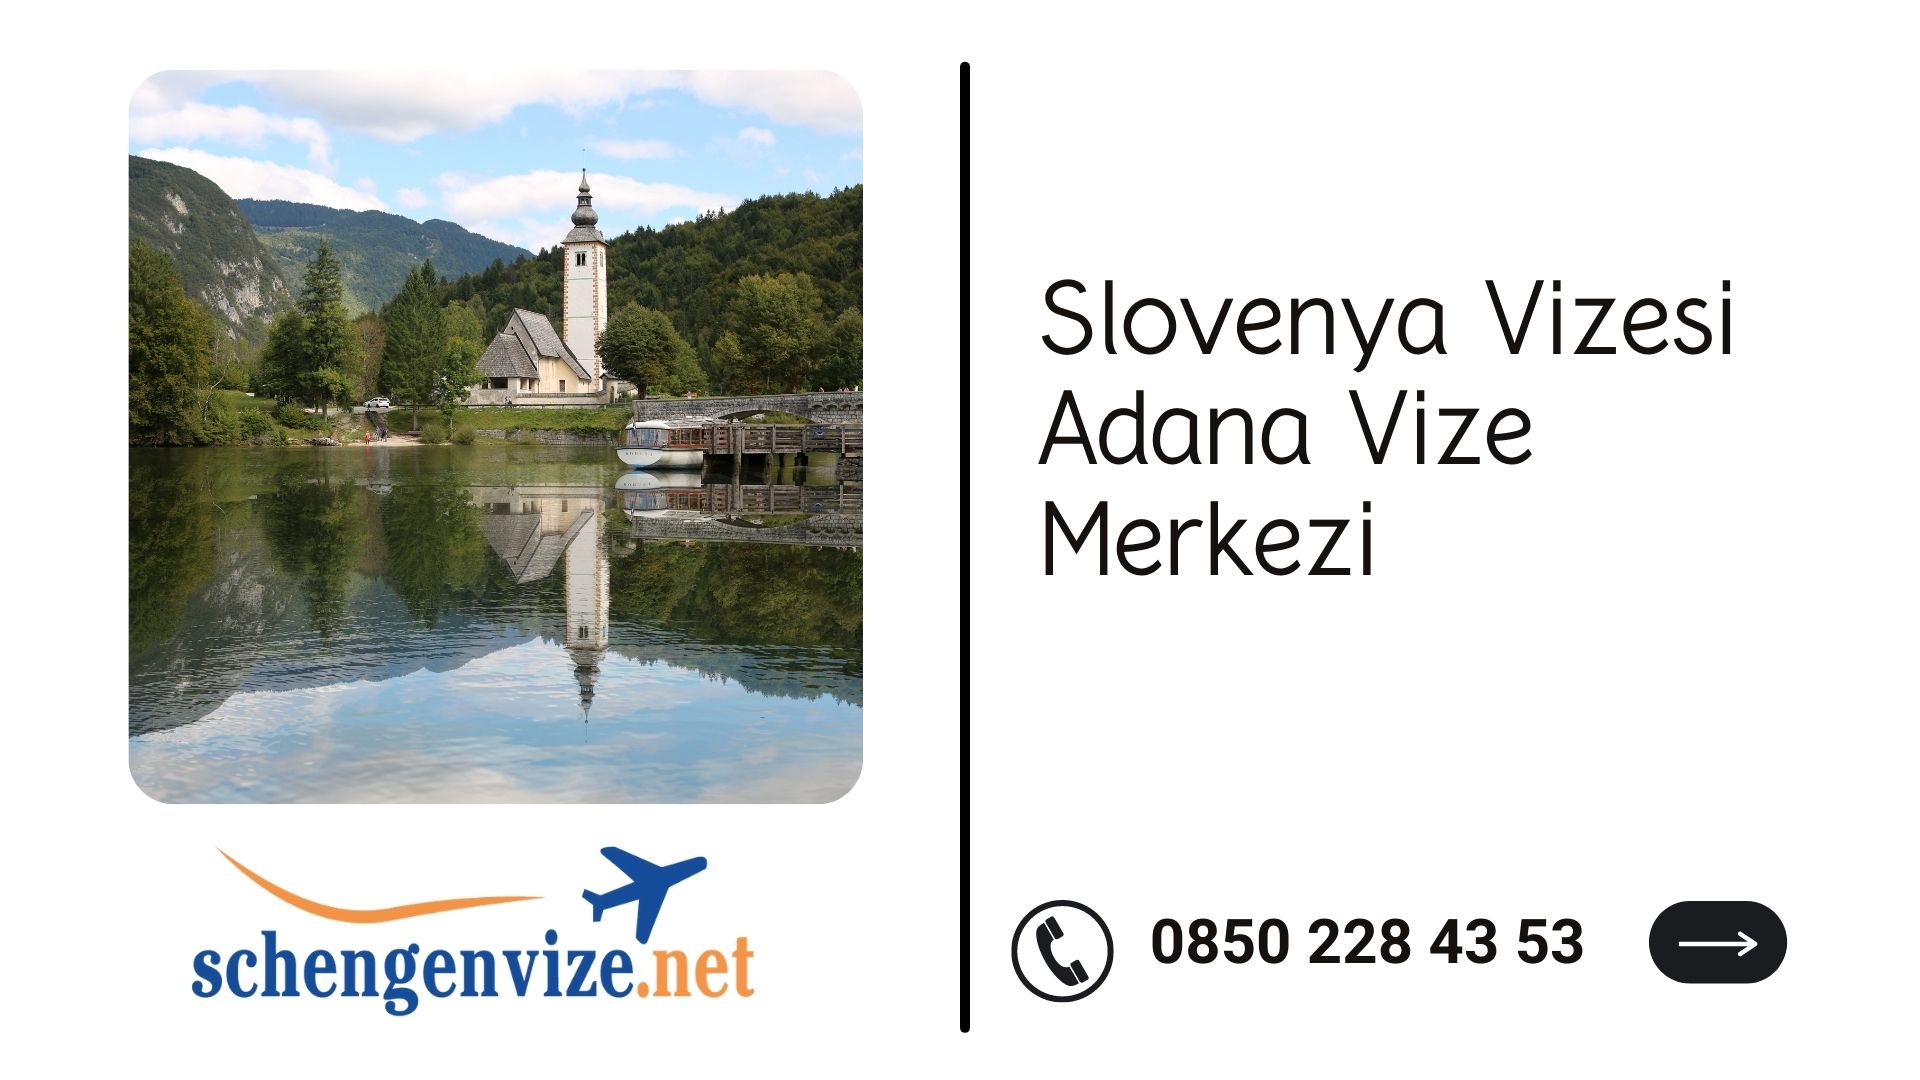 Slovenya Vizesi Adana Vize Merkezi